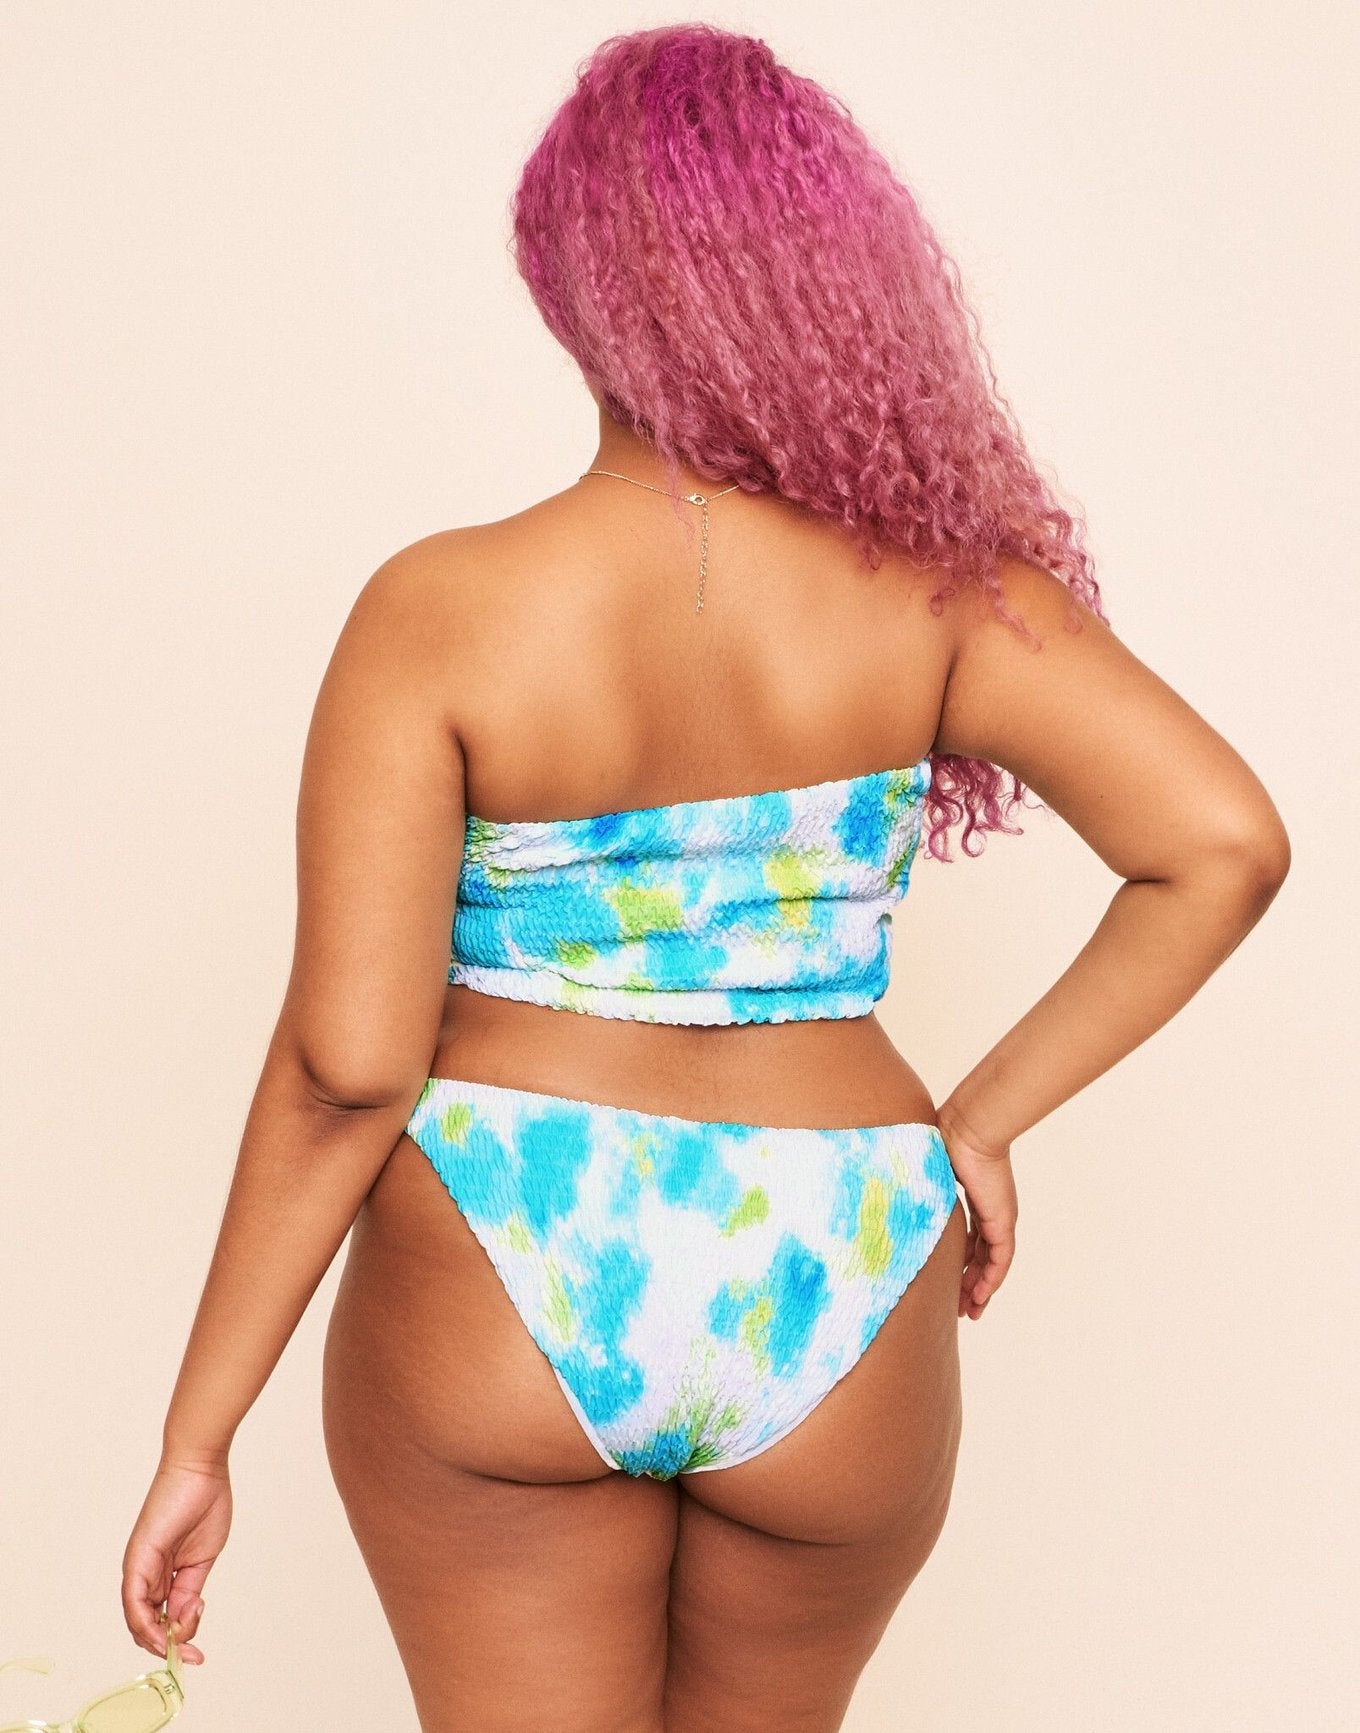 Earth Republic Arlette Smocking Bandeau Top Swim Top in color PR171261 - Opt01 and shape bikini